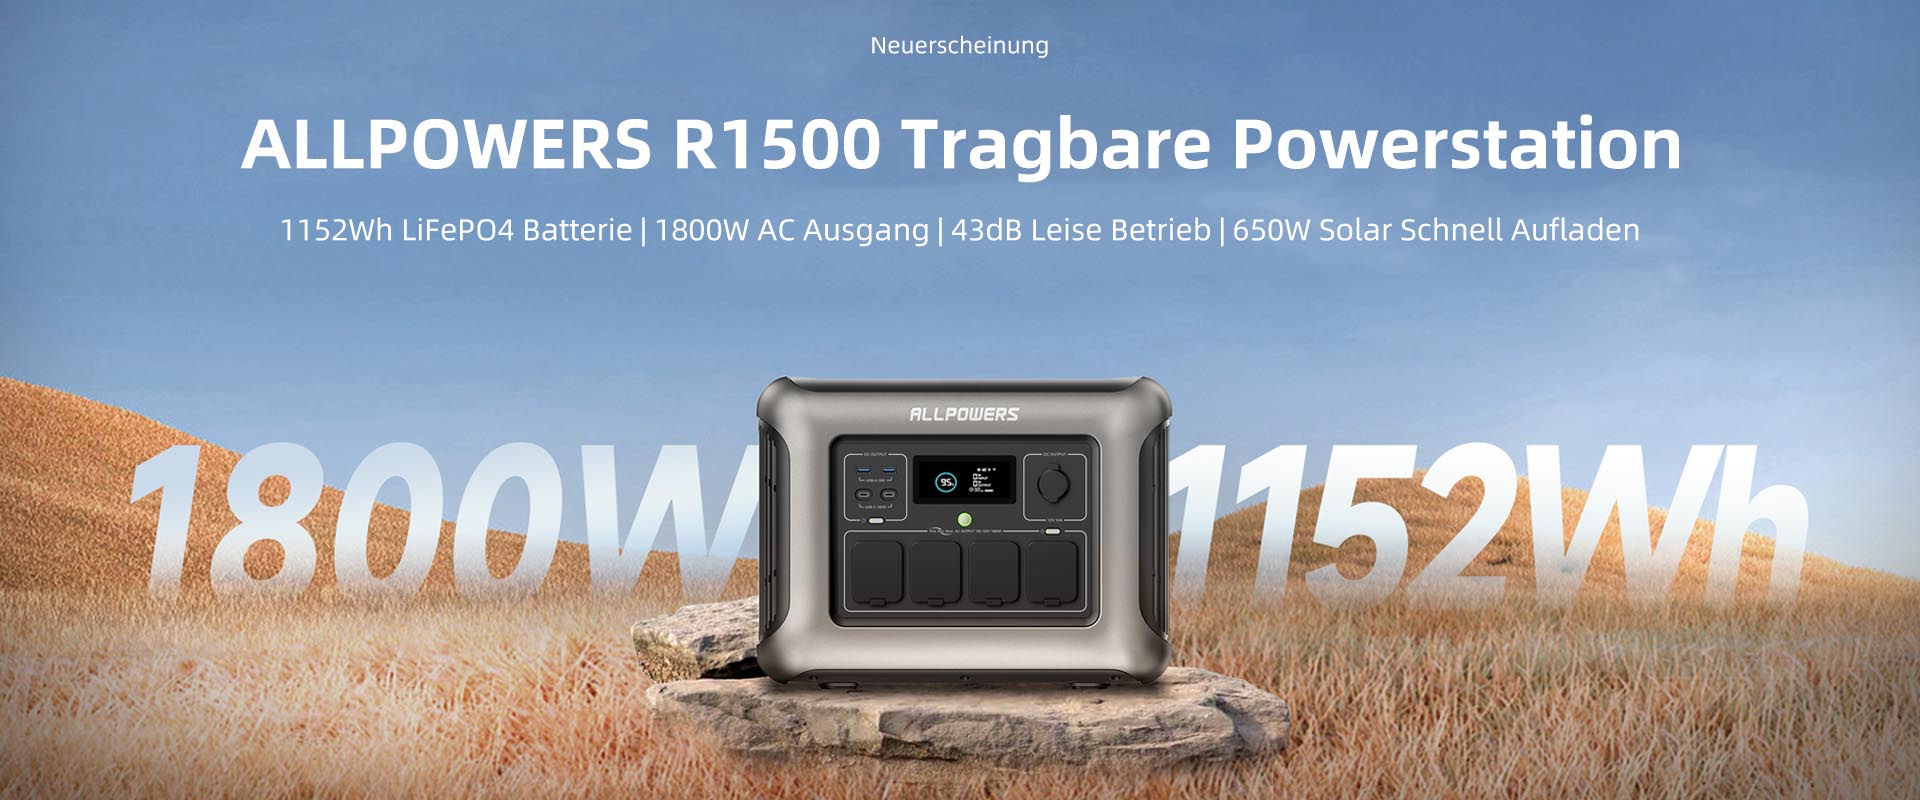 r1500-power-station-home-backup-portable.jpg